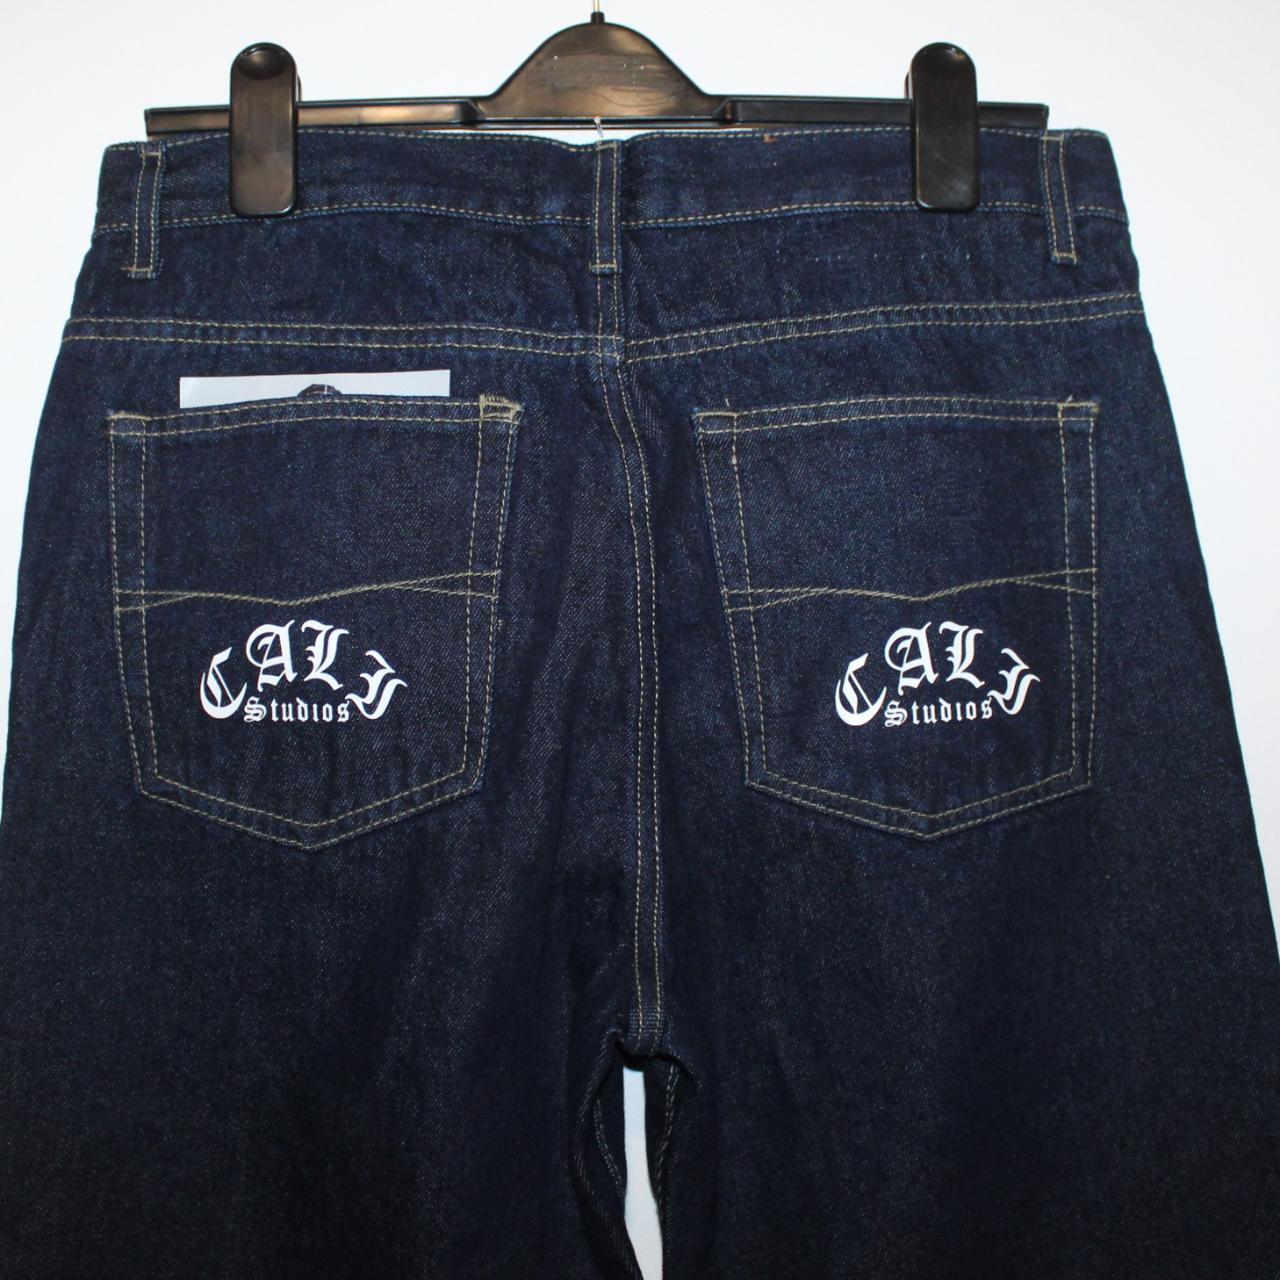 Cali Studios Part 1 Jeans in Raw Indigo, 30 L,... - Depop